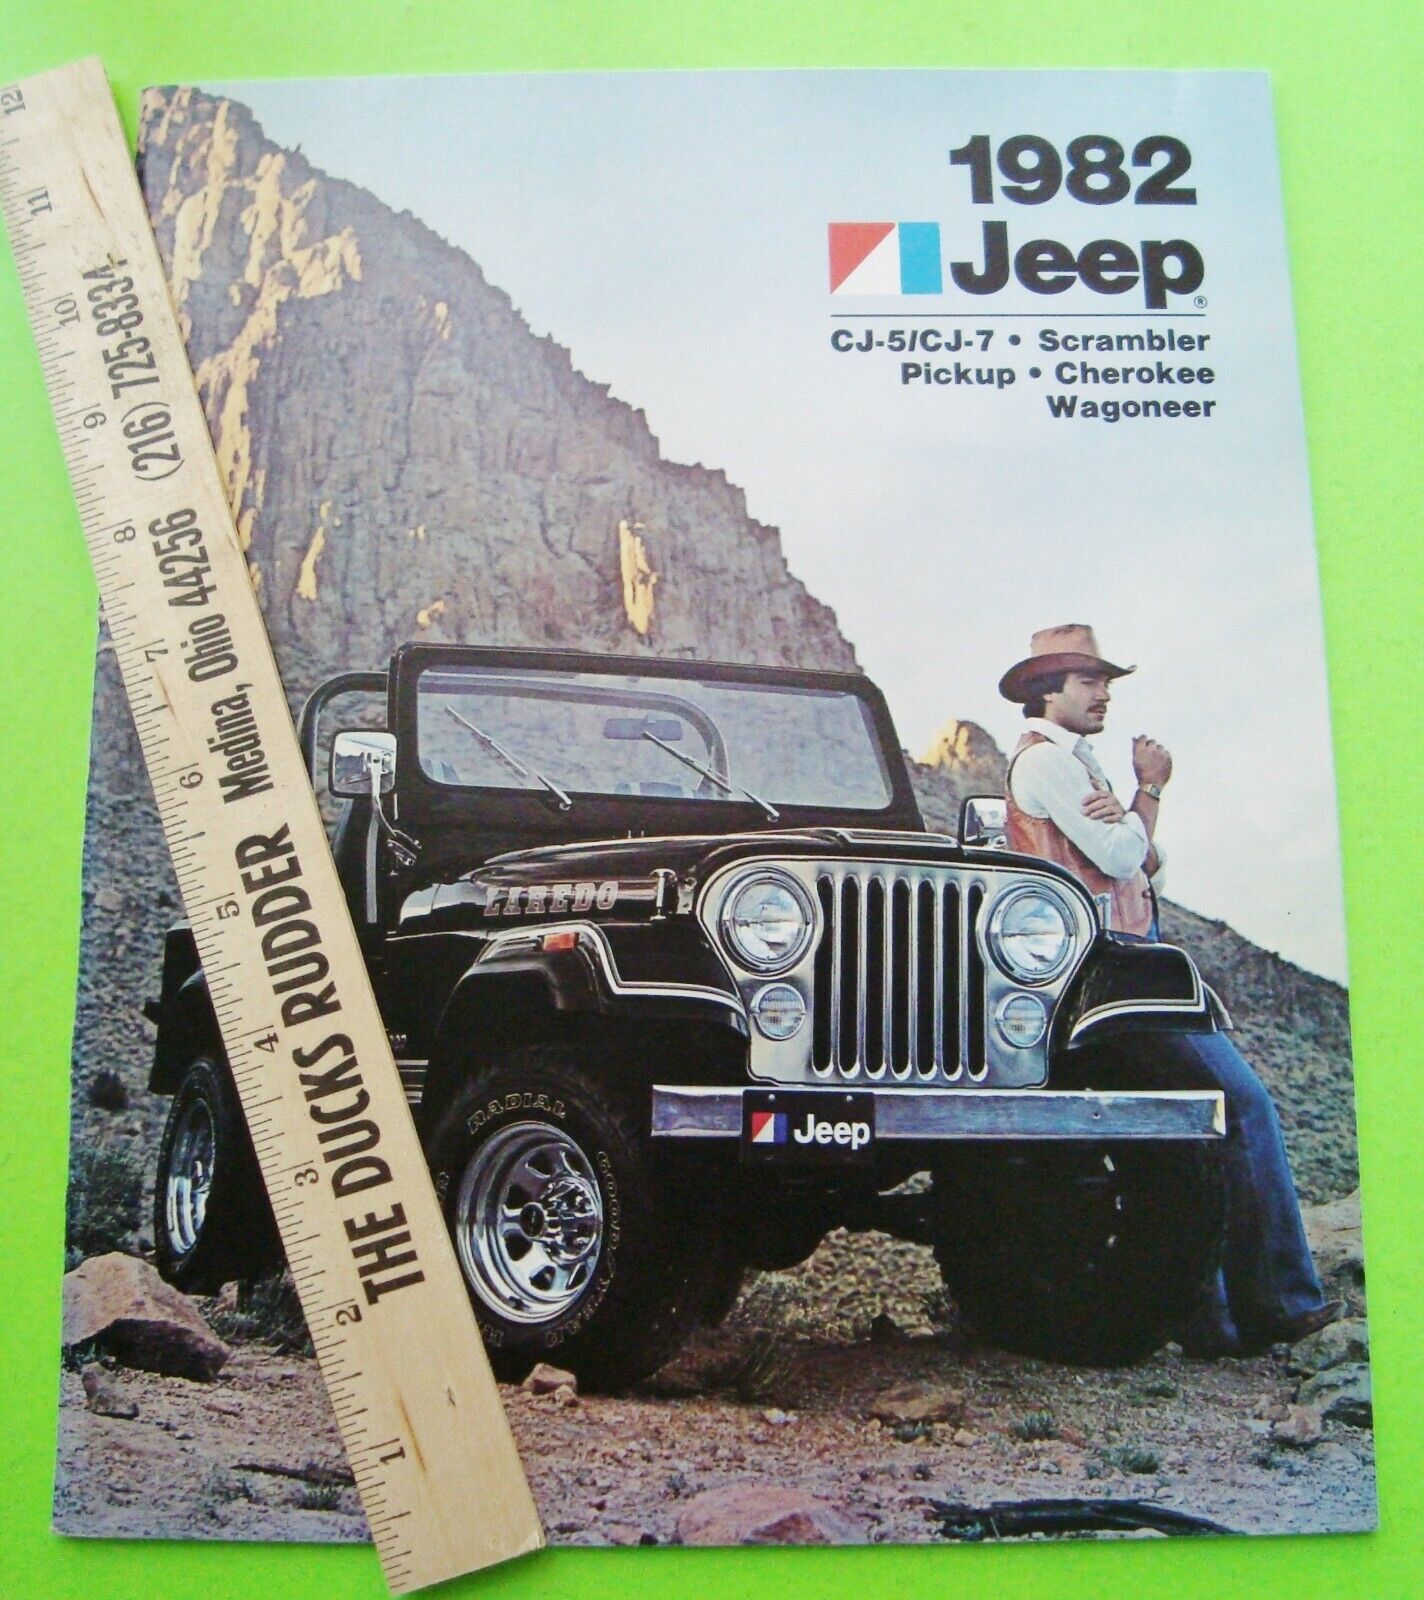 1982 Jeep Full Line Prestige Brochure 40-pgs Cj-7 Cherokee Scrambler Pick-up 4x4